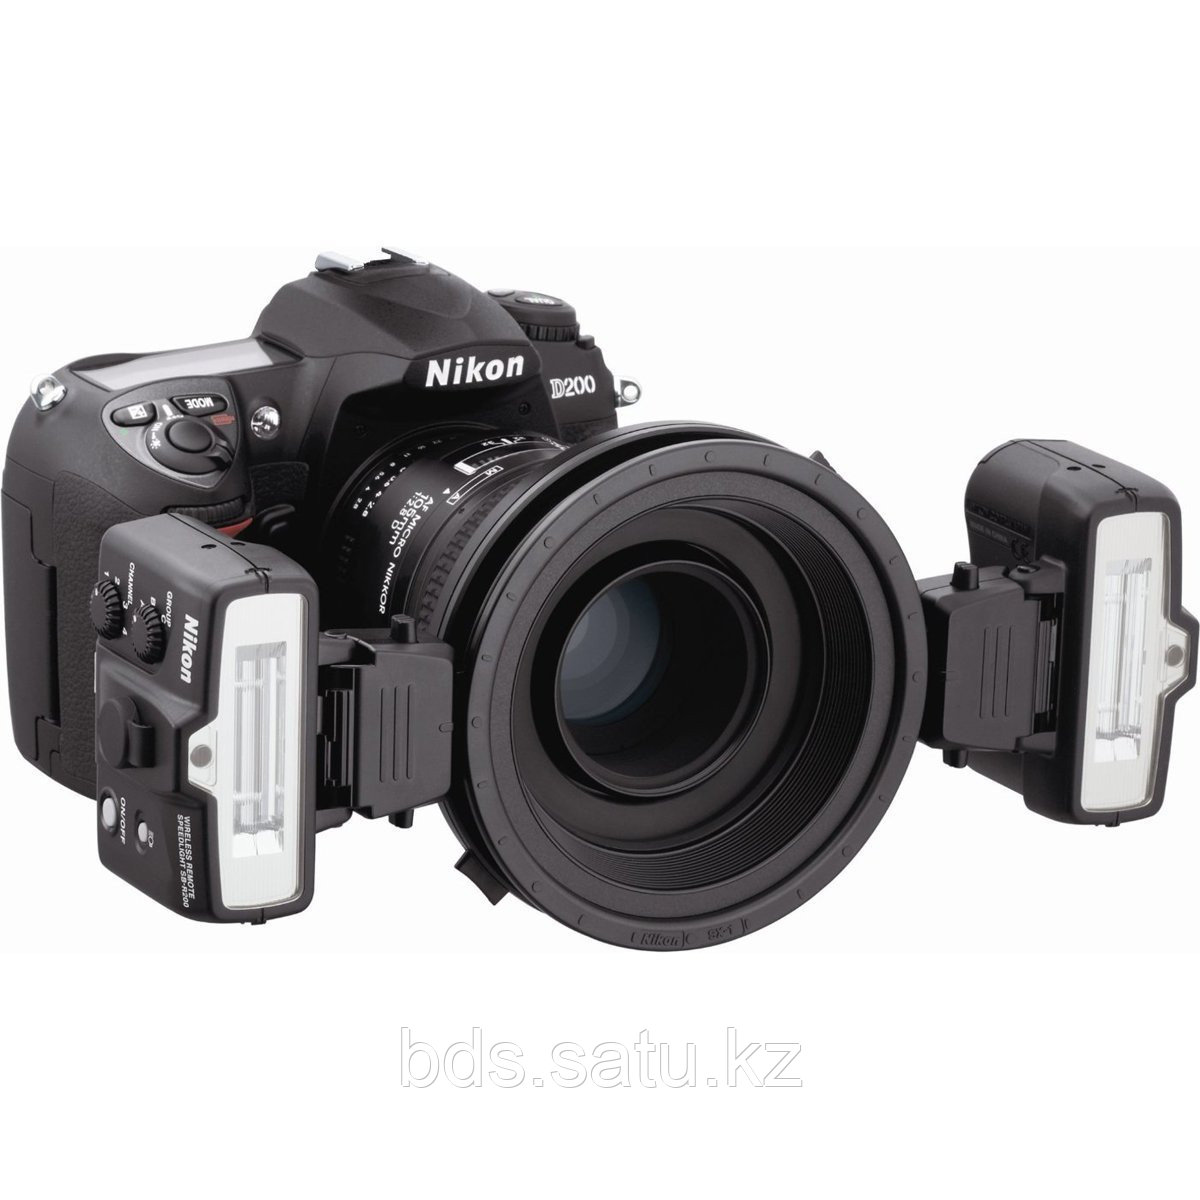 Nikon R1 Wireless Close-Up Speedlight System